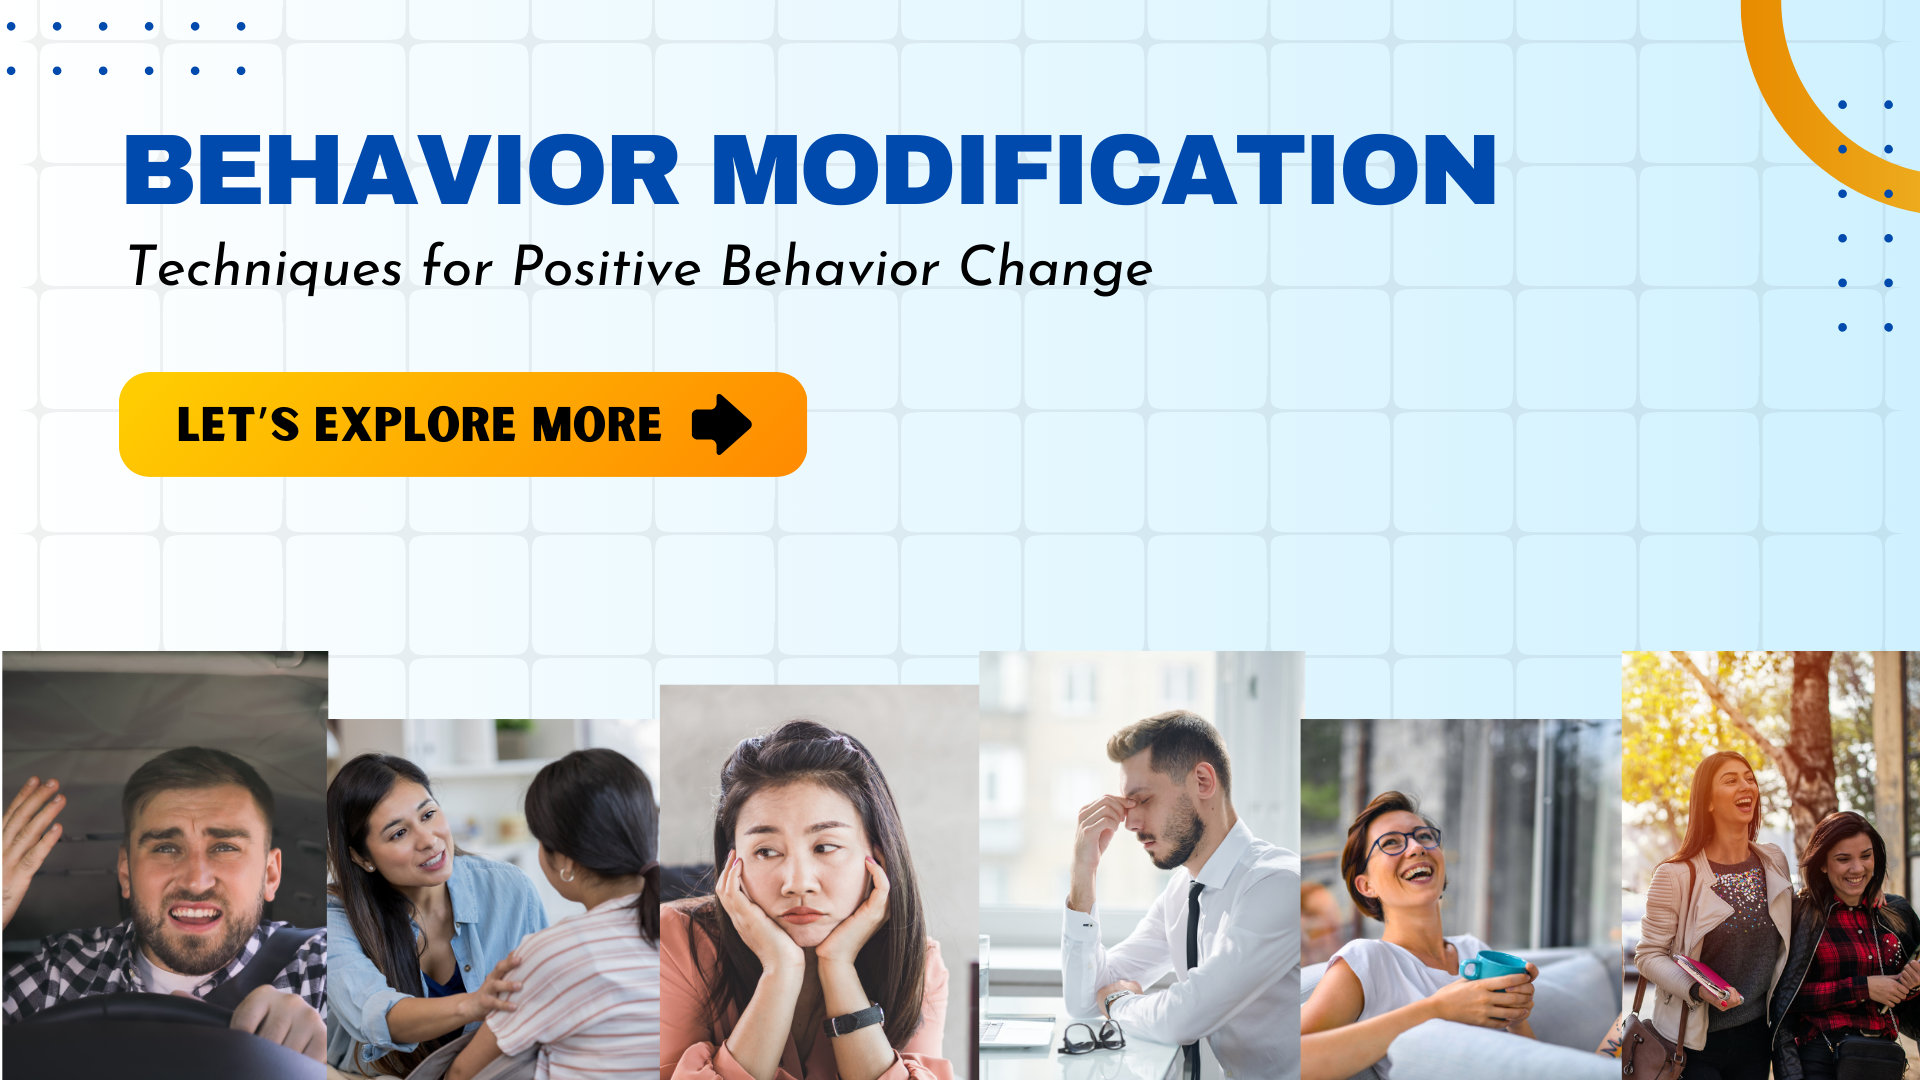 How Does Behavior Modification Work? Techniques for Positive Behavior Change